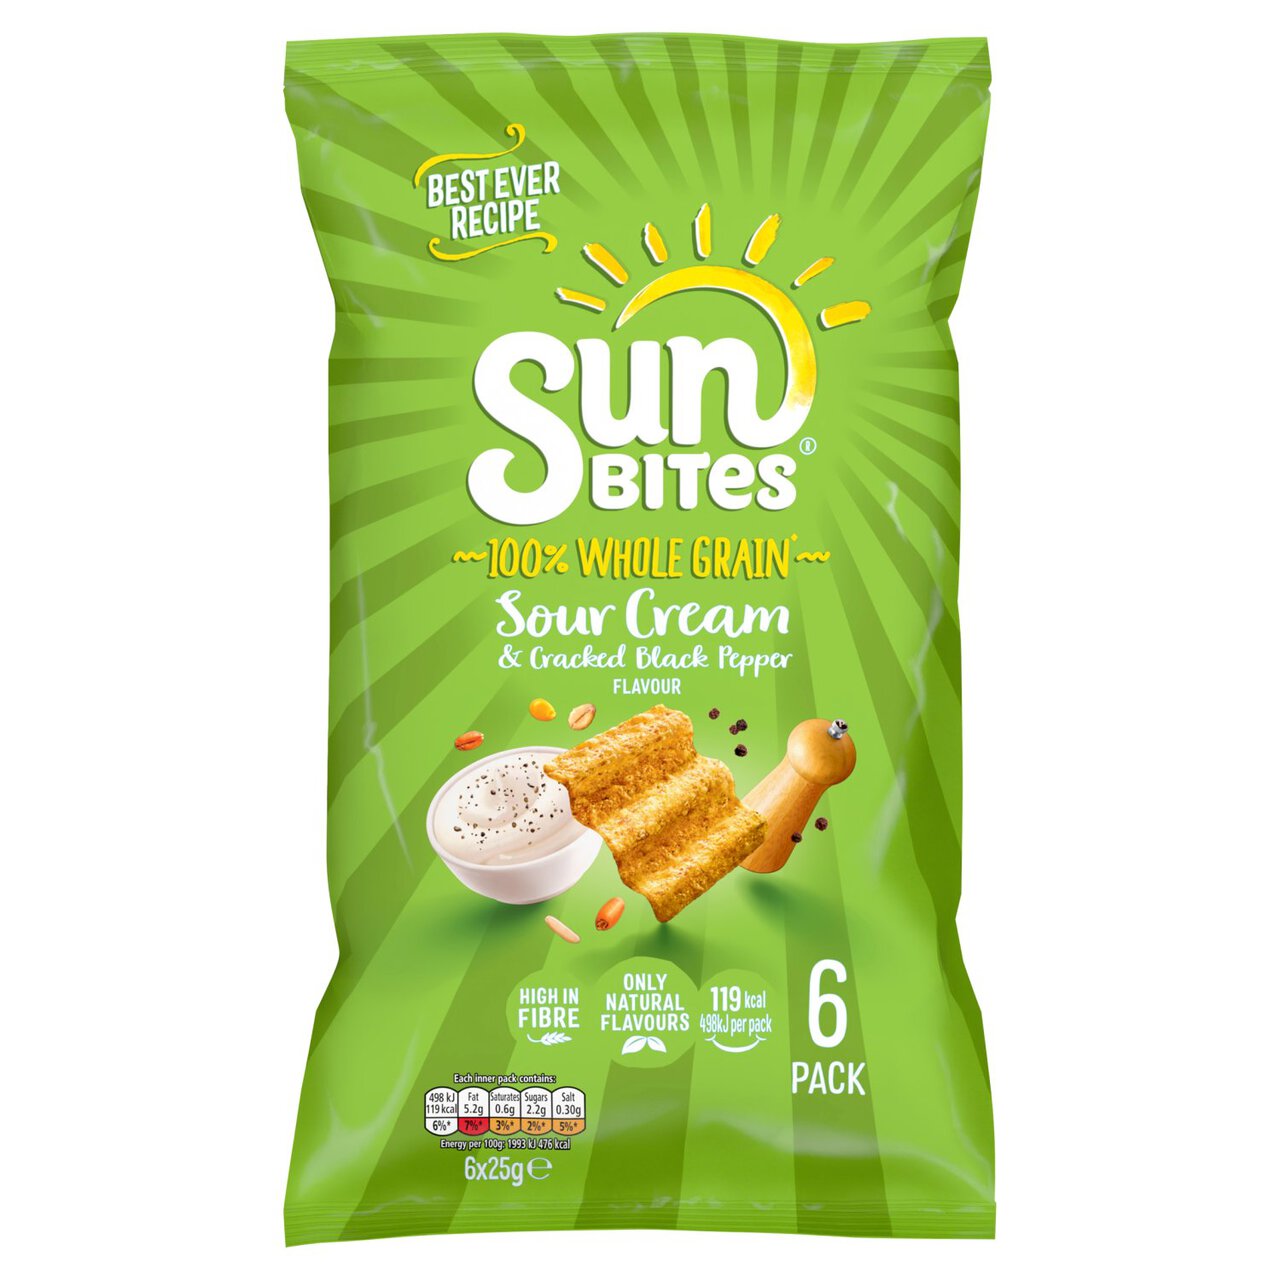 SunBites Sour Cream & Pepper Multigrain Snacks 6 per pack